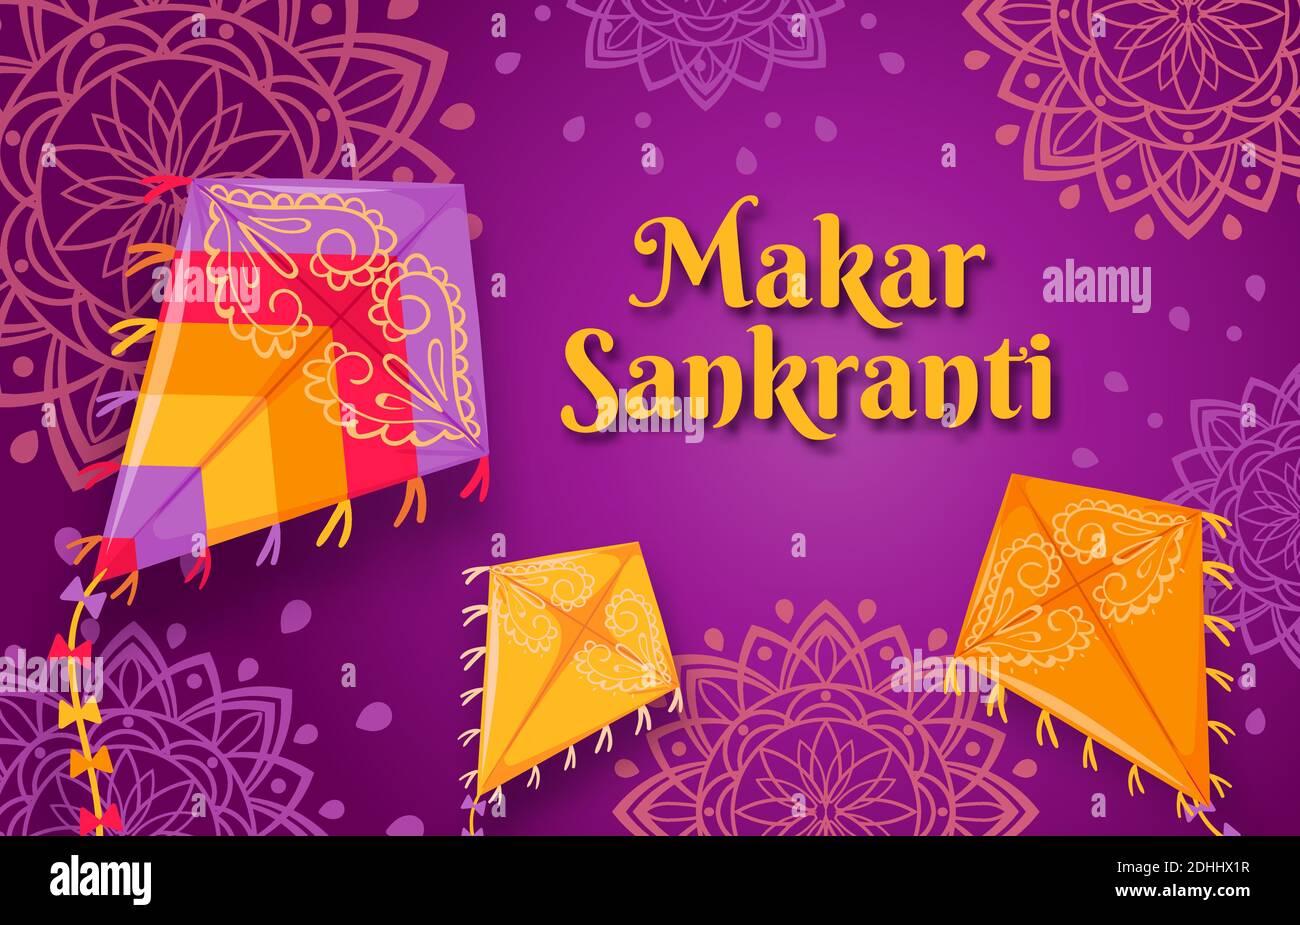 Makar Sankranti Festival. Happy Indian Sun Celebration Day Poster mit fliegenden Drachen. Sankrant Ernte Grußkarte oder Banner Vektor Konzept Stock Vektor